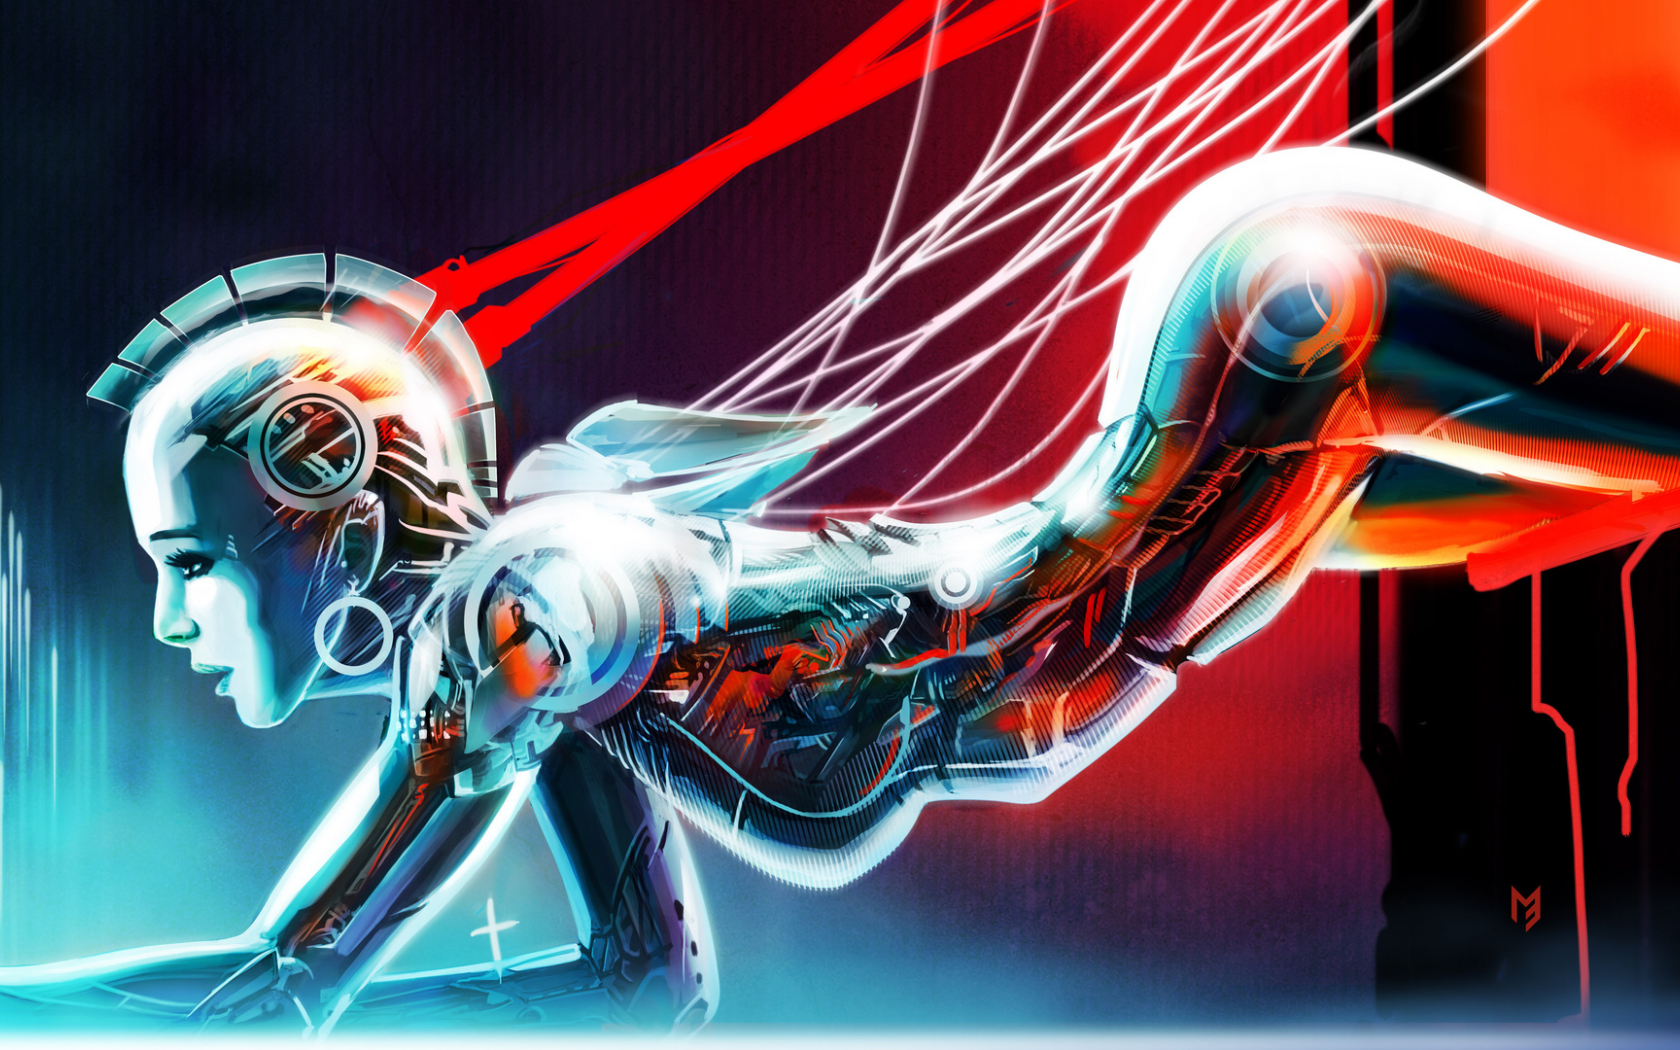 Free download Sci fi women cyborg robot mech wallpaper 1920x1080 28518 [1920x1080] for your Desktop, Mobile & Tablet. Explore Anime Sci Fi Wallpaper. Sci Fi City Wallpaper, 3D